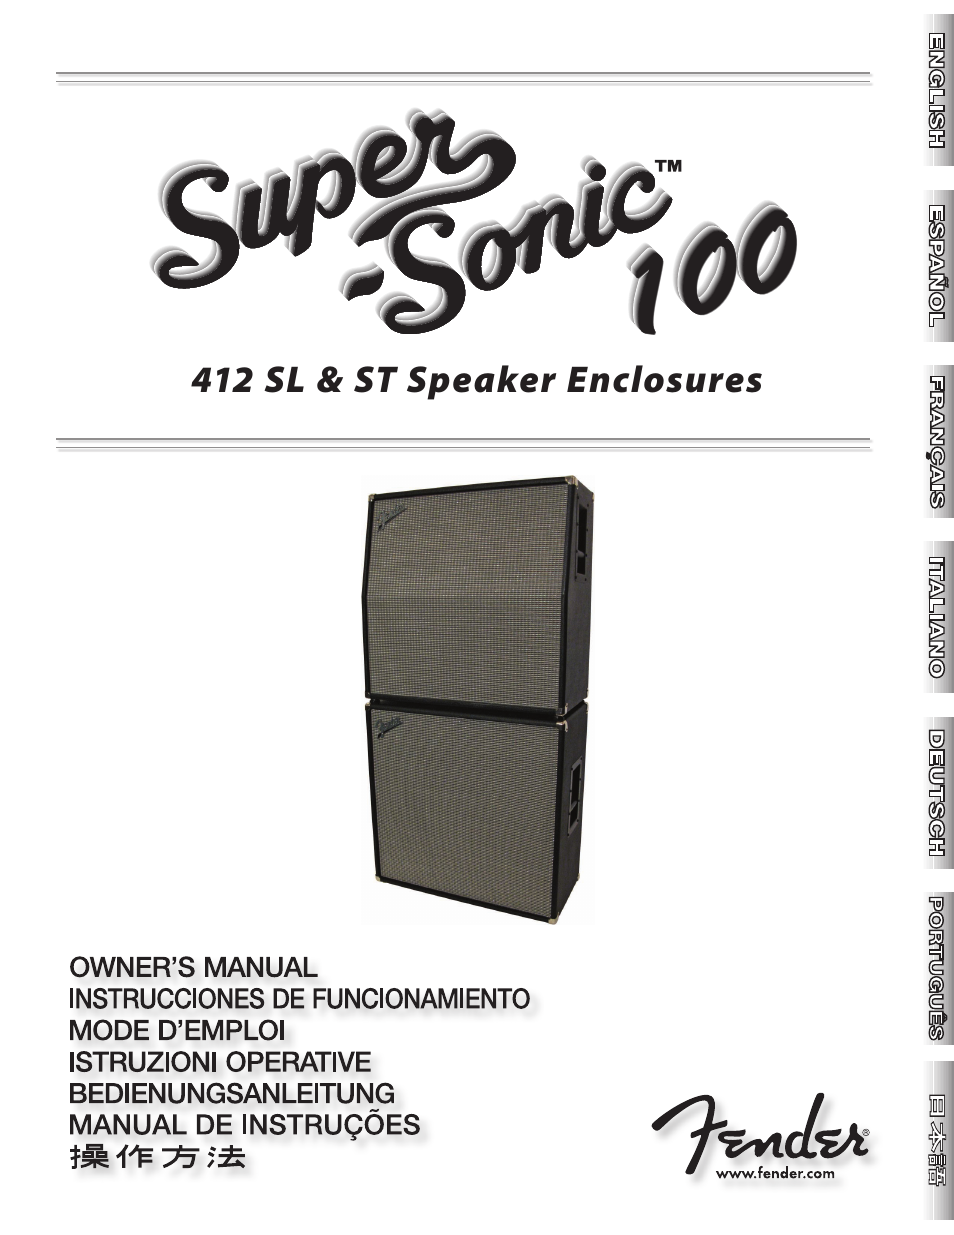 Super Sonic 100 412 SL